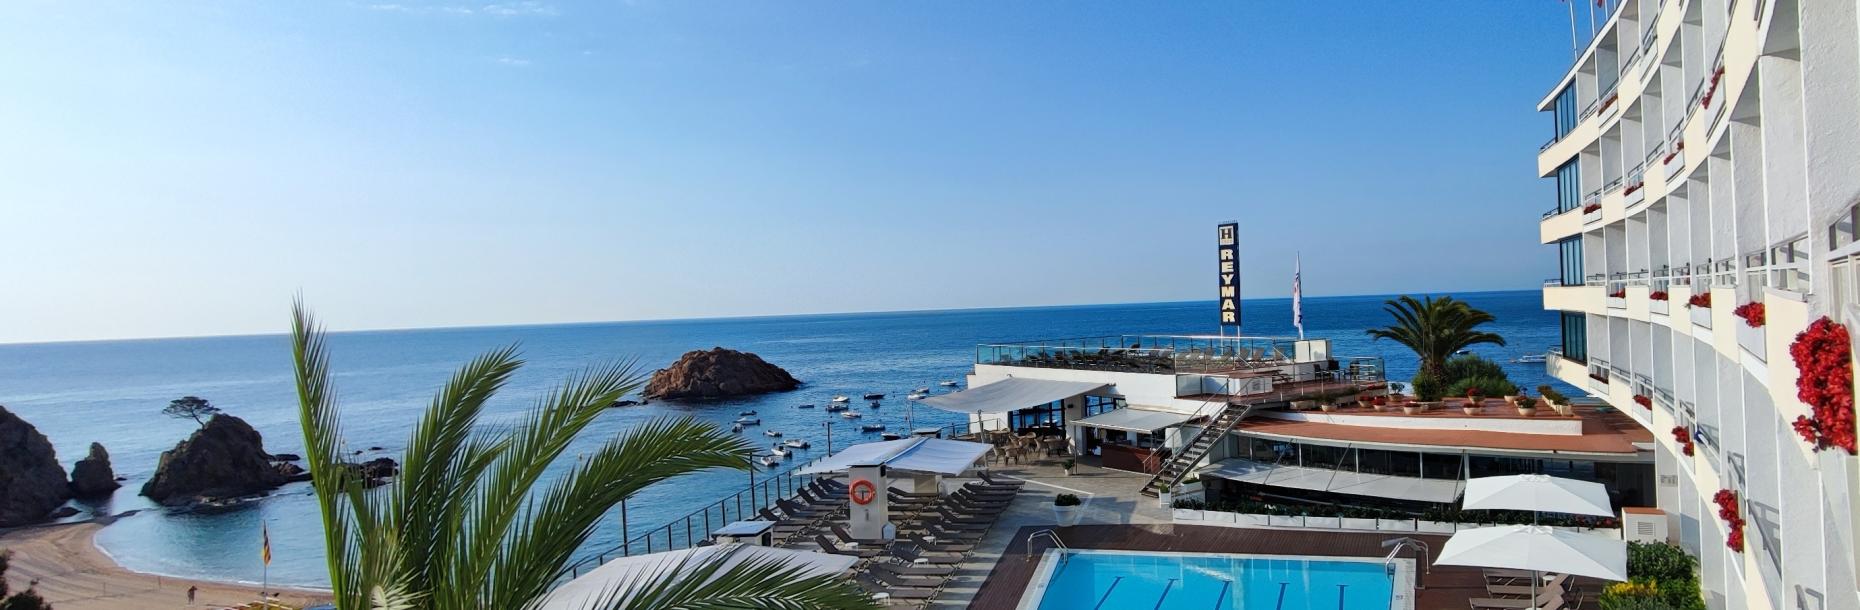 GRAN HOTEL REYMAR****s: votre hôtel de charme à Tossa de Mar, Costa Brava